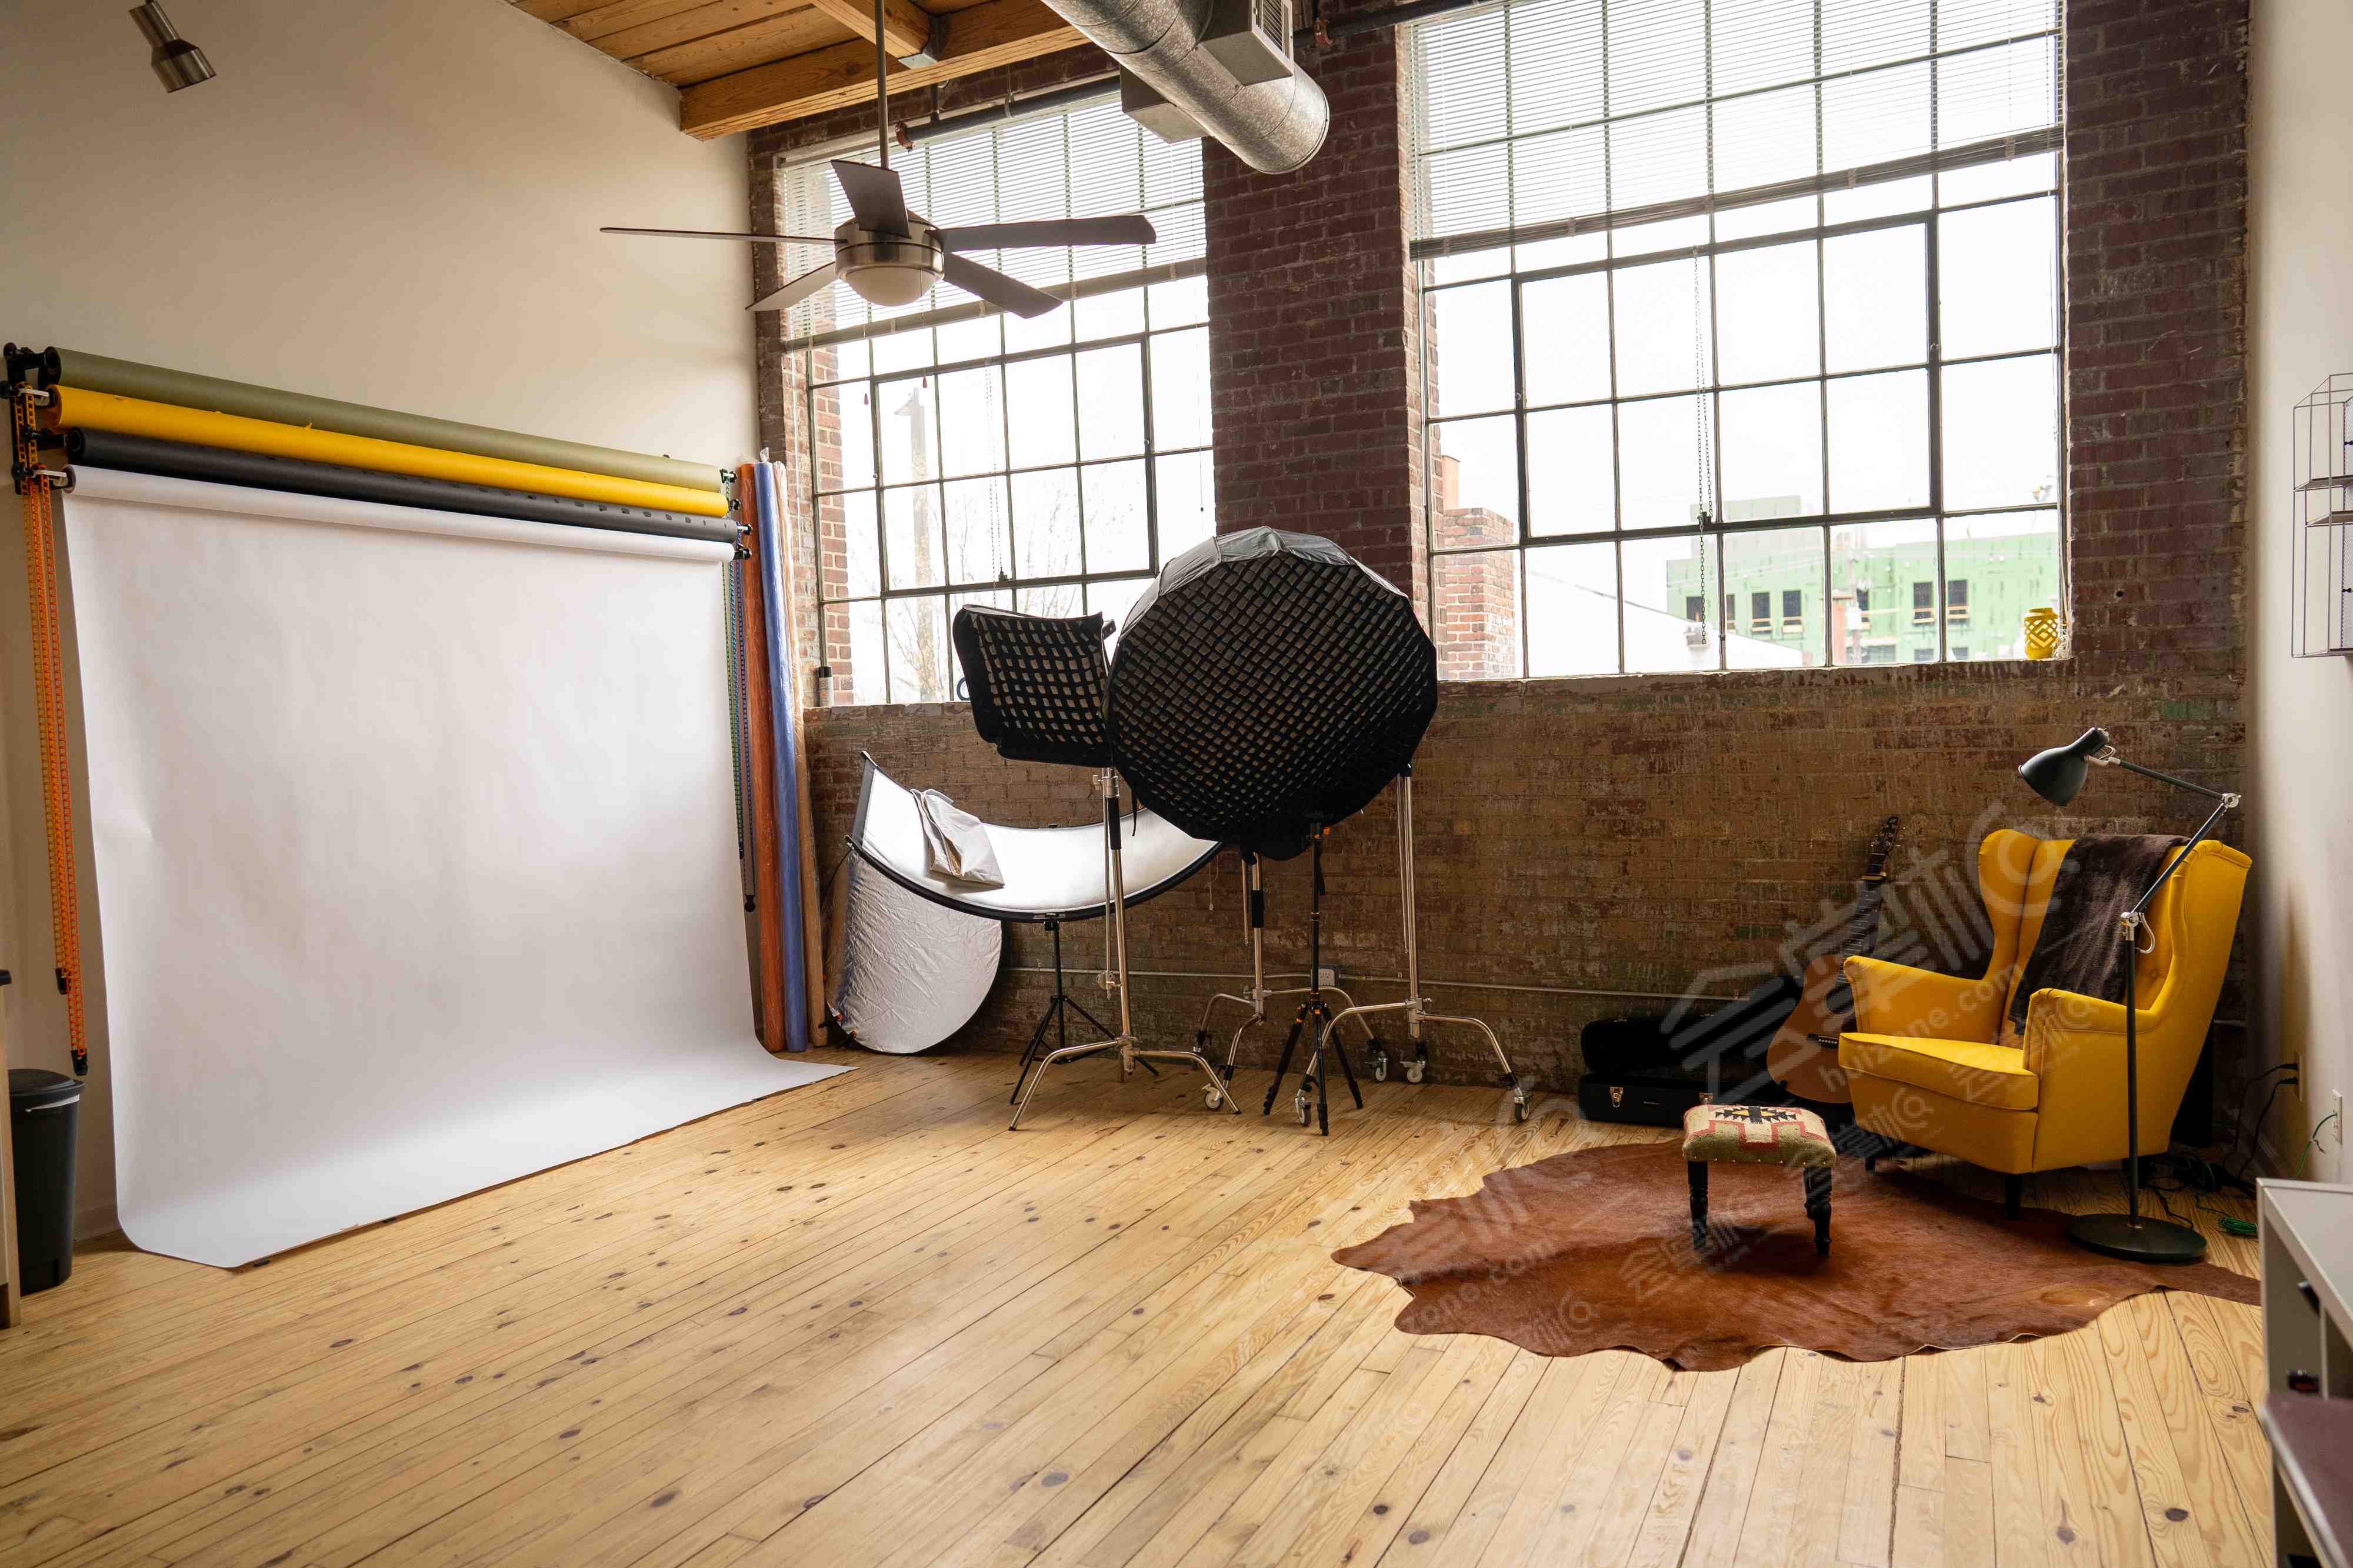 Industrial Exposed Brick Studio Loft with Beautiful Natural Light